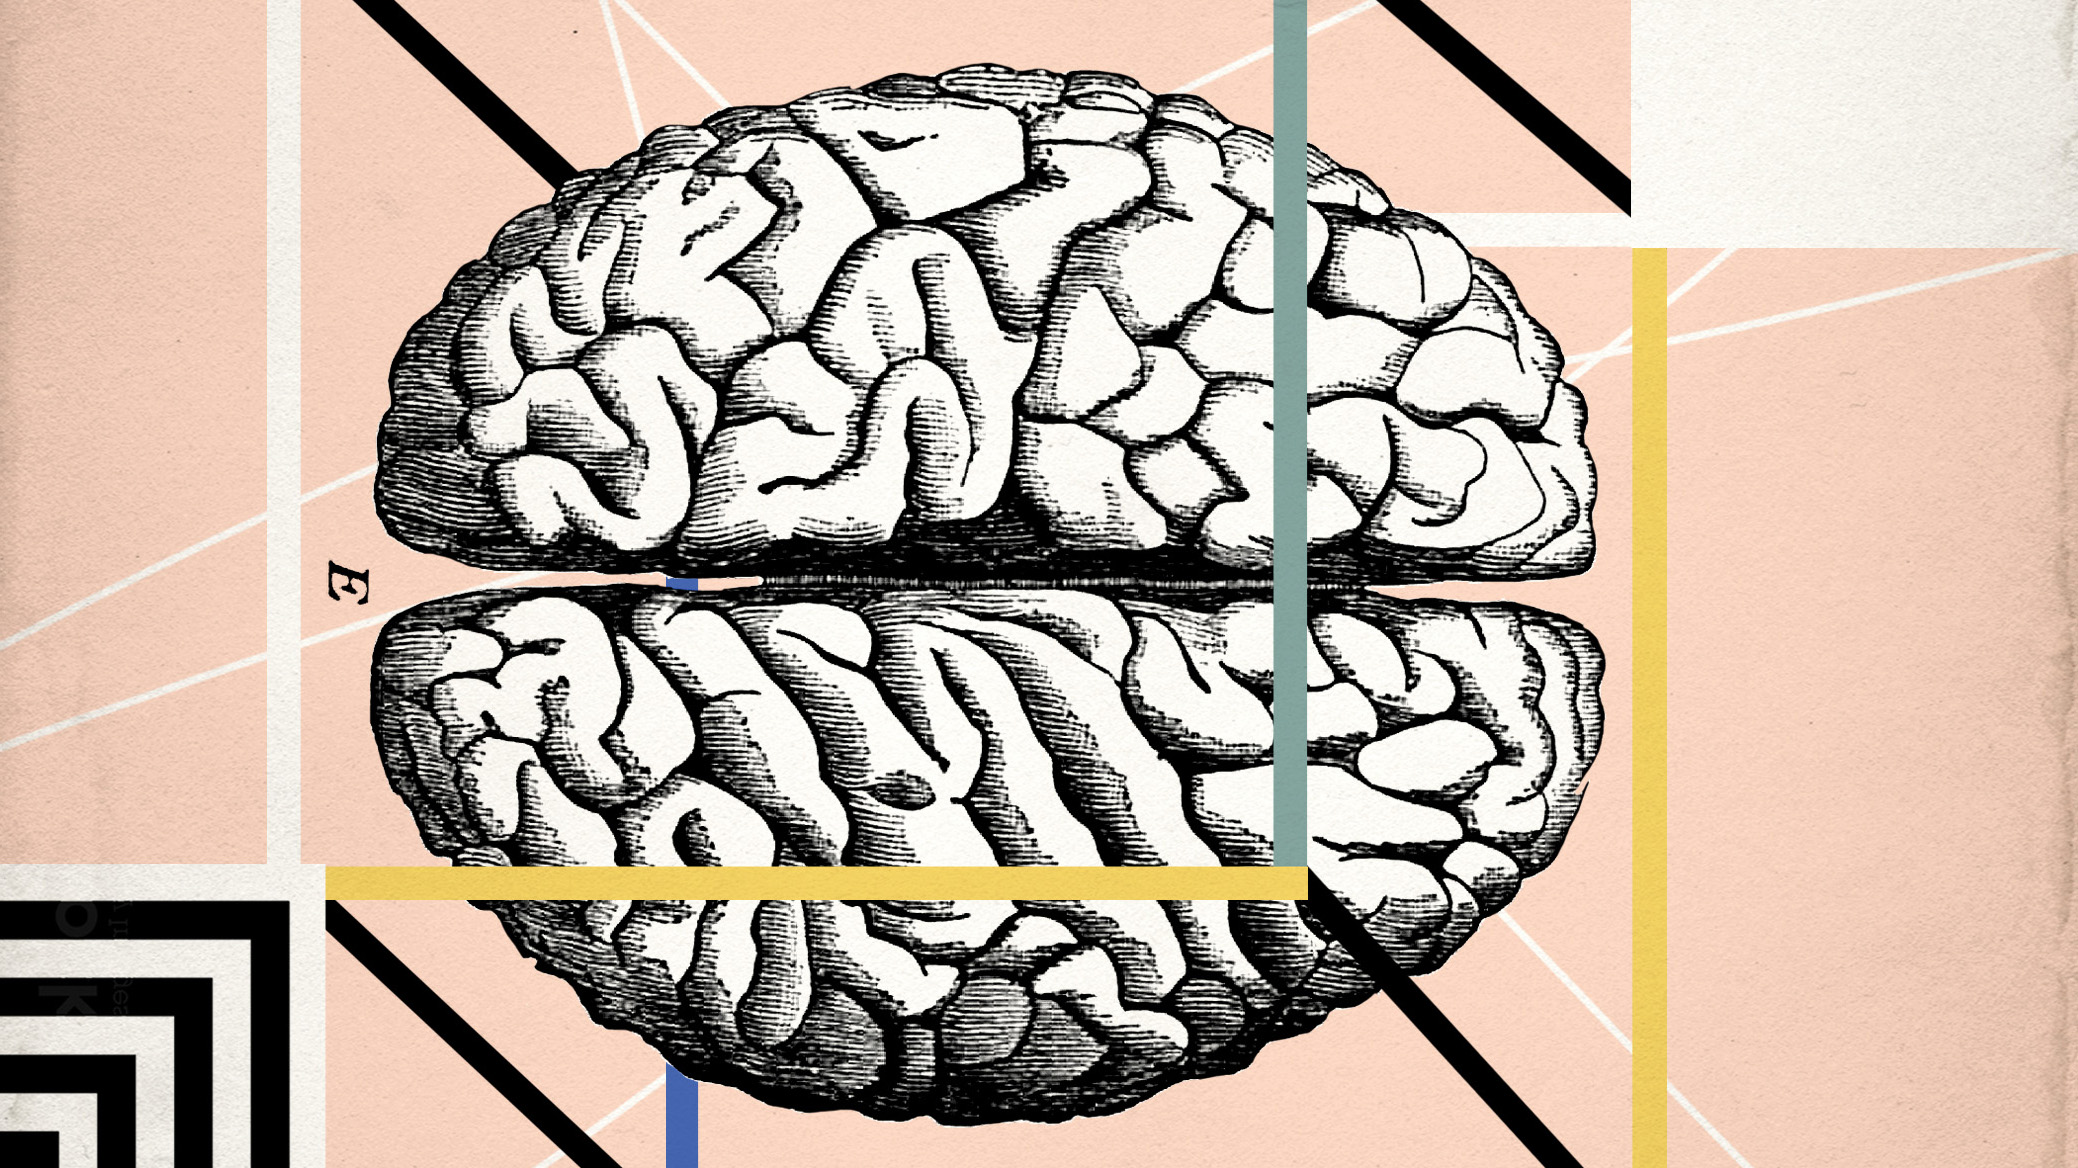 human brain mapping sci journal